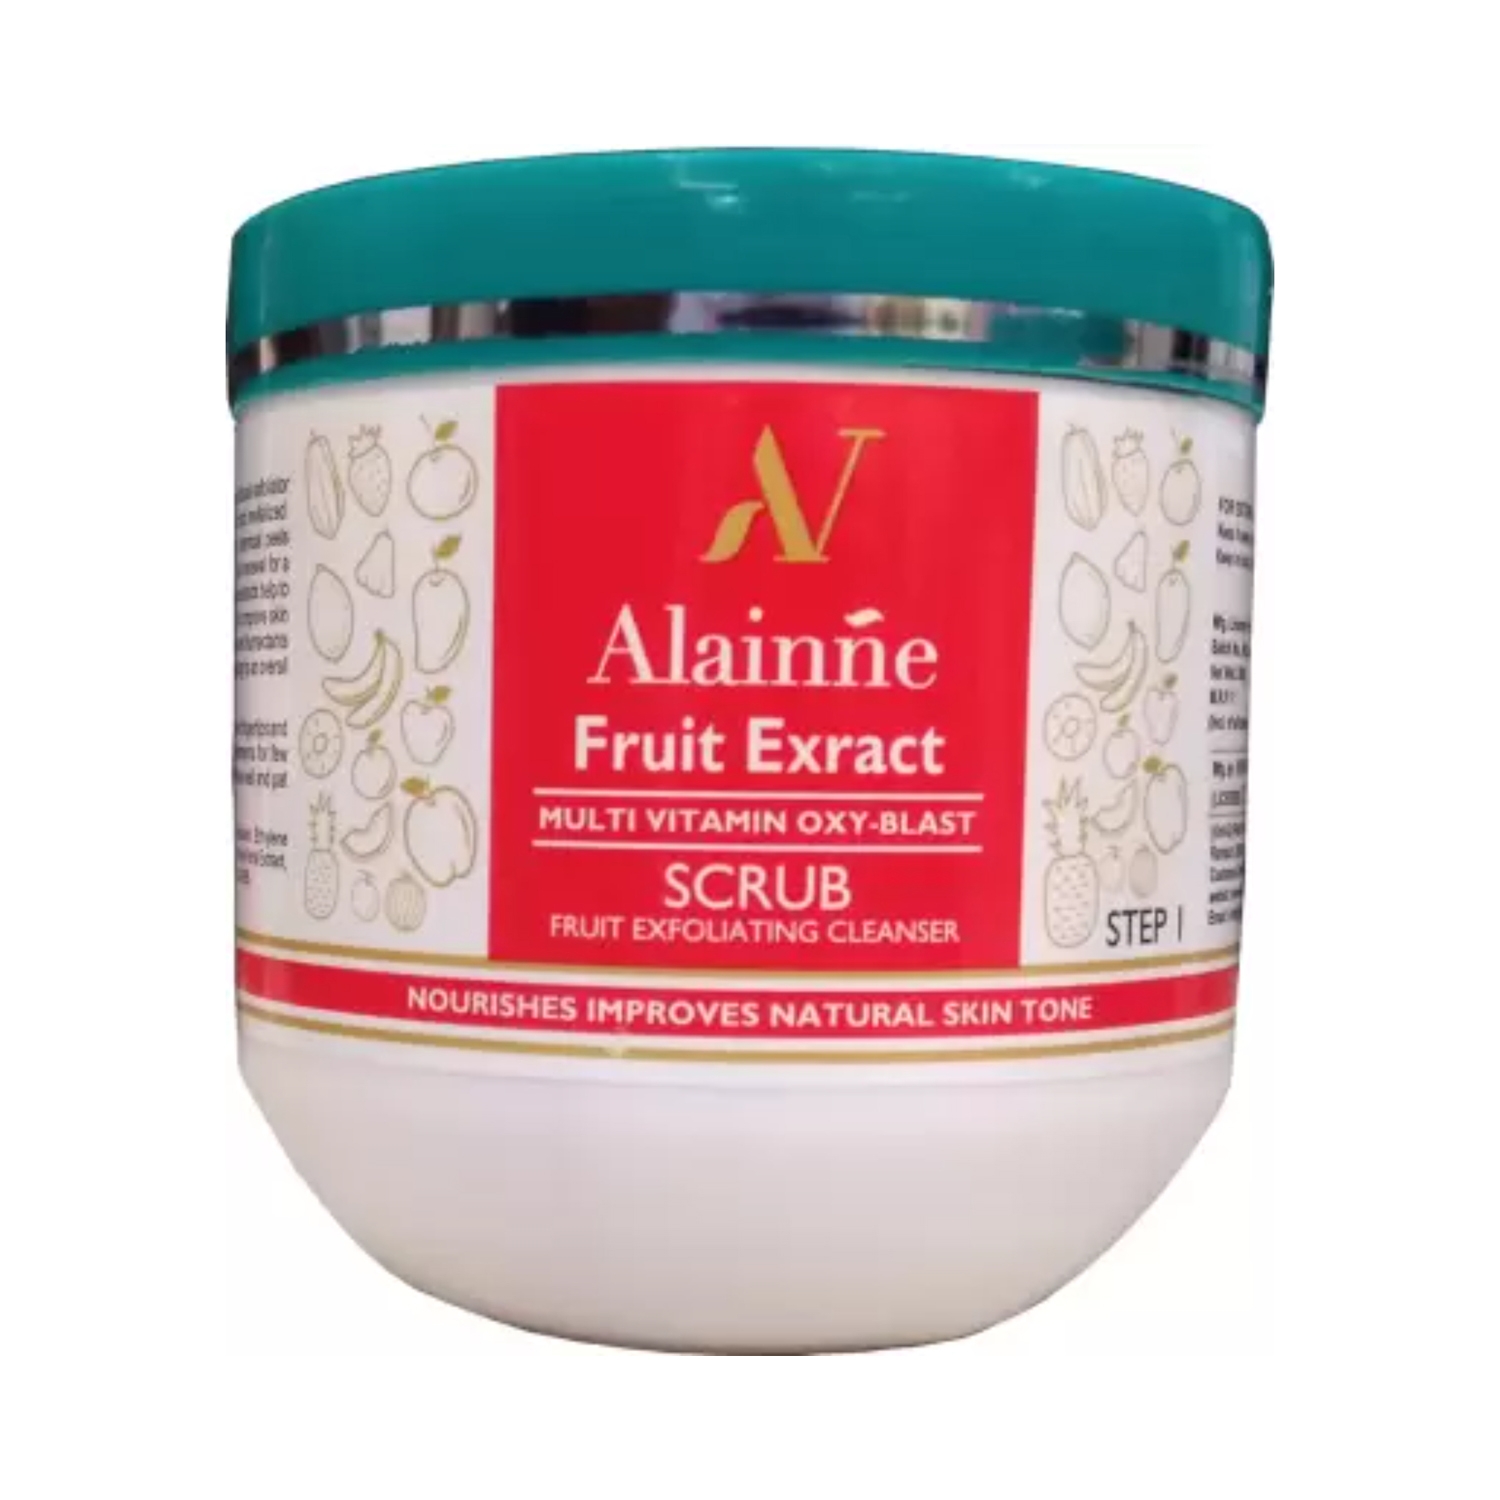 Alainne | Alainne Fruit Extract Multi Vitamin Oxy Blast Step-1 Face Scrub - (500g)